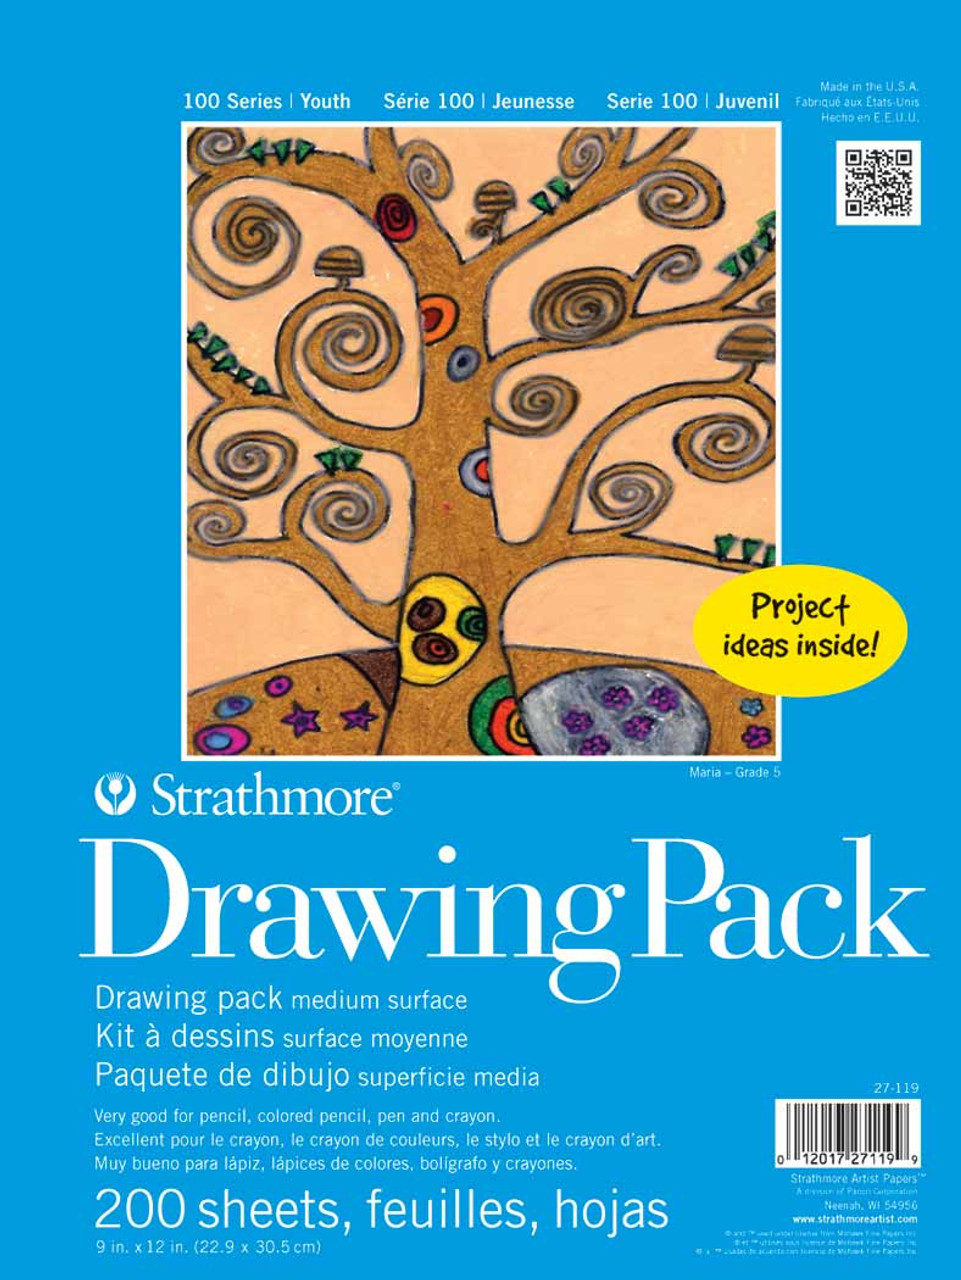 Strathmore Construction Paper Bulk Pack - Wet Paint Artists